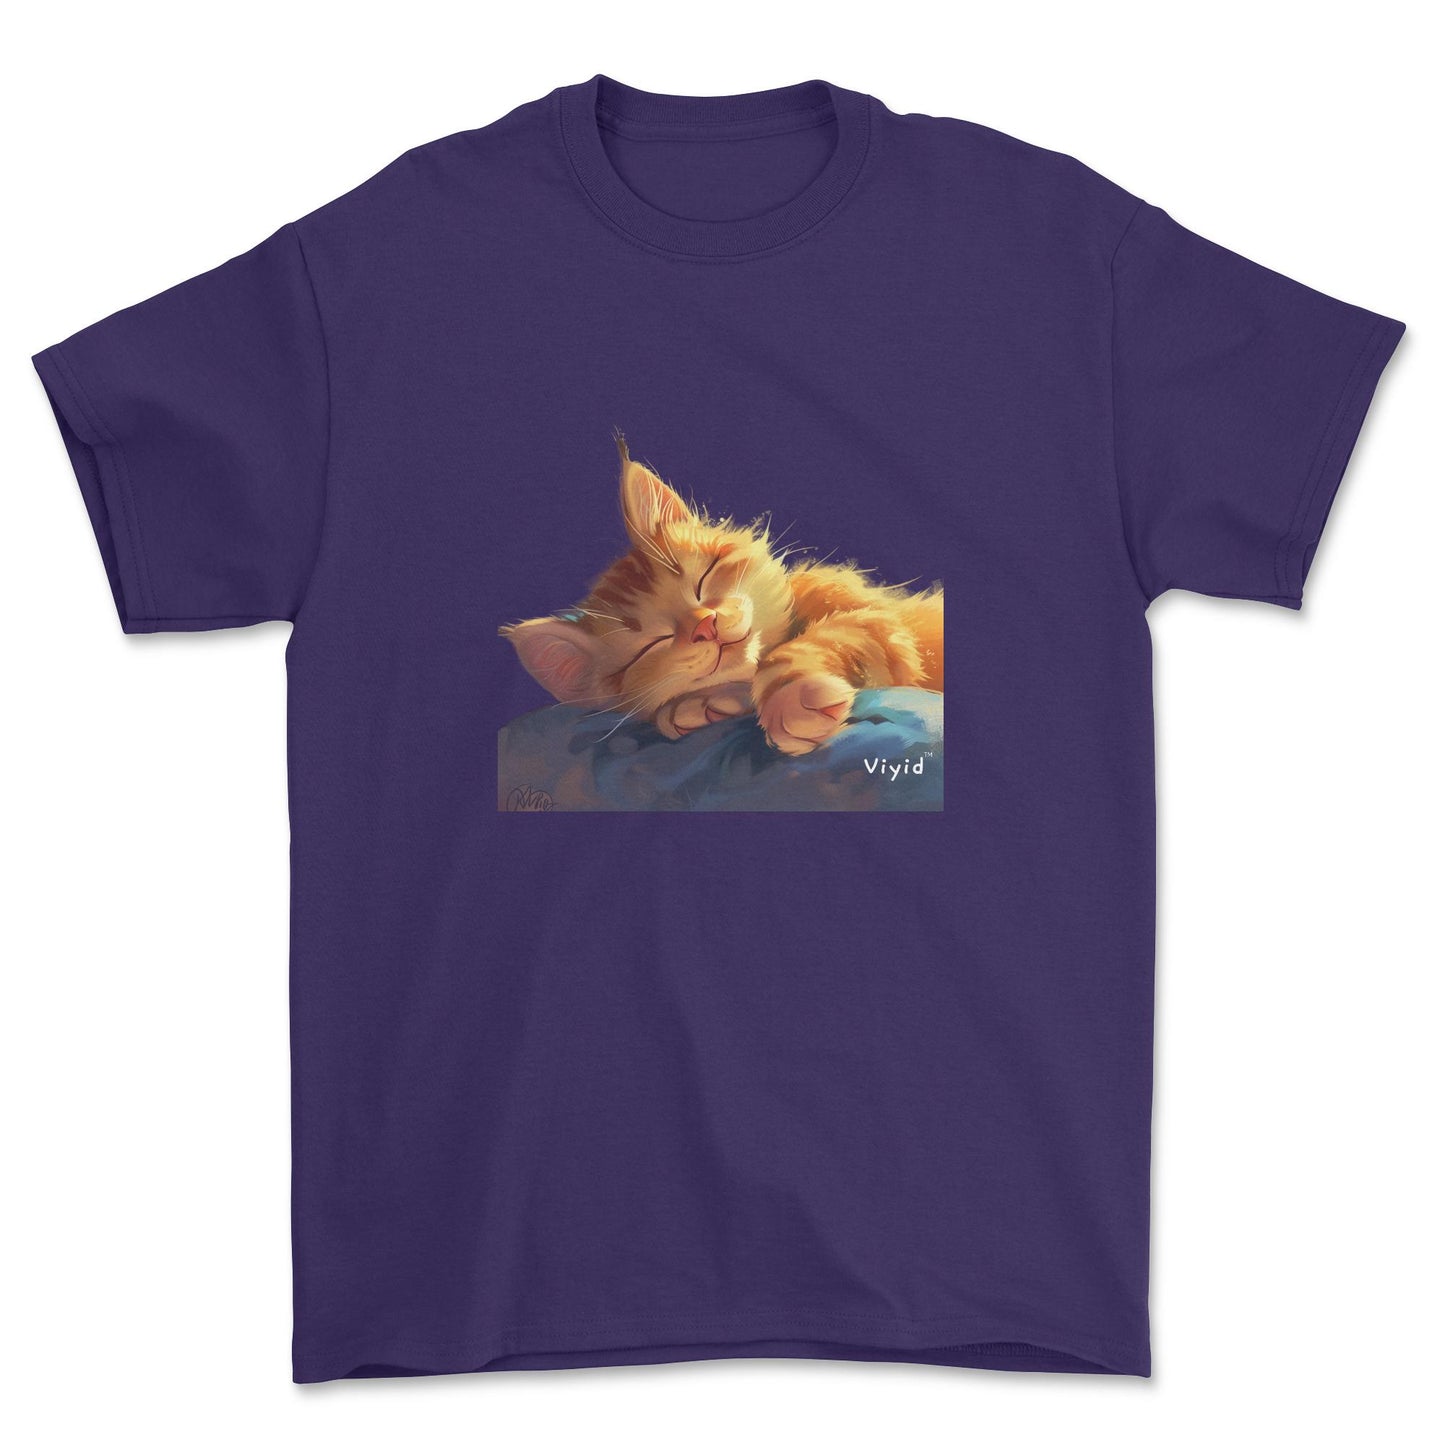 sleeping ginger cat youth t-shirt purple